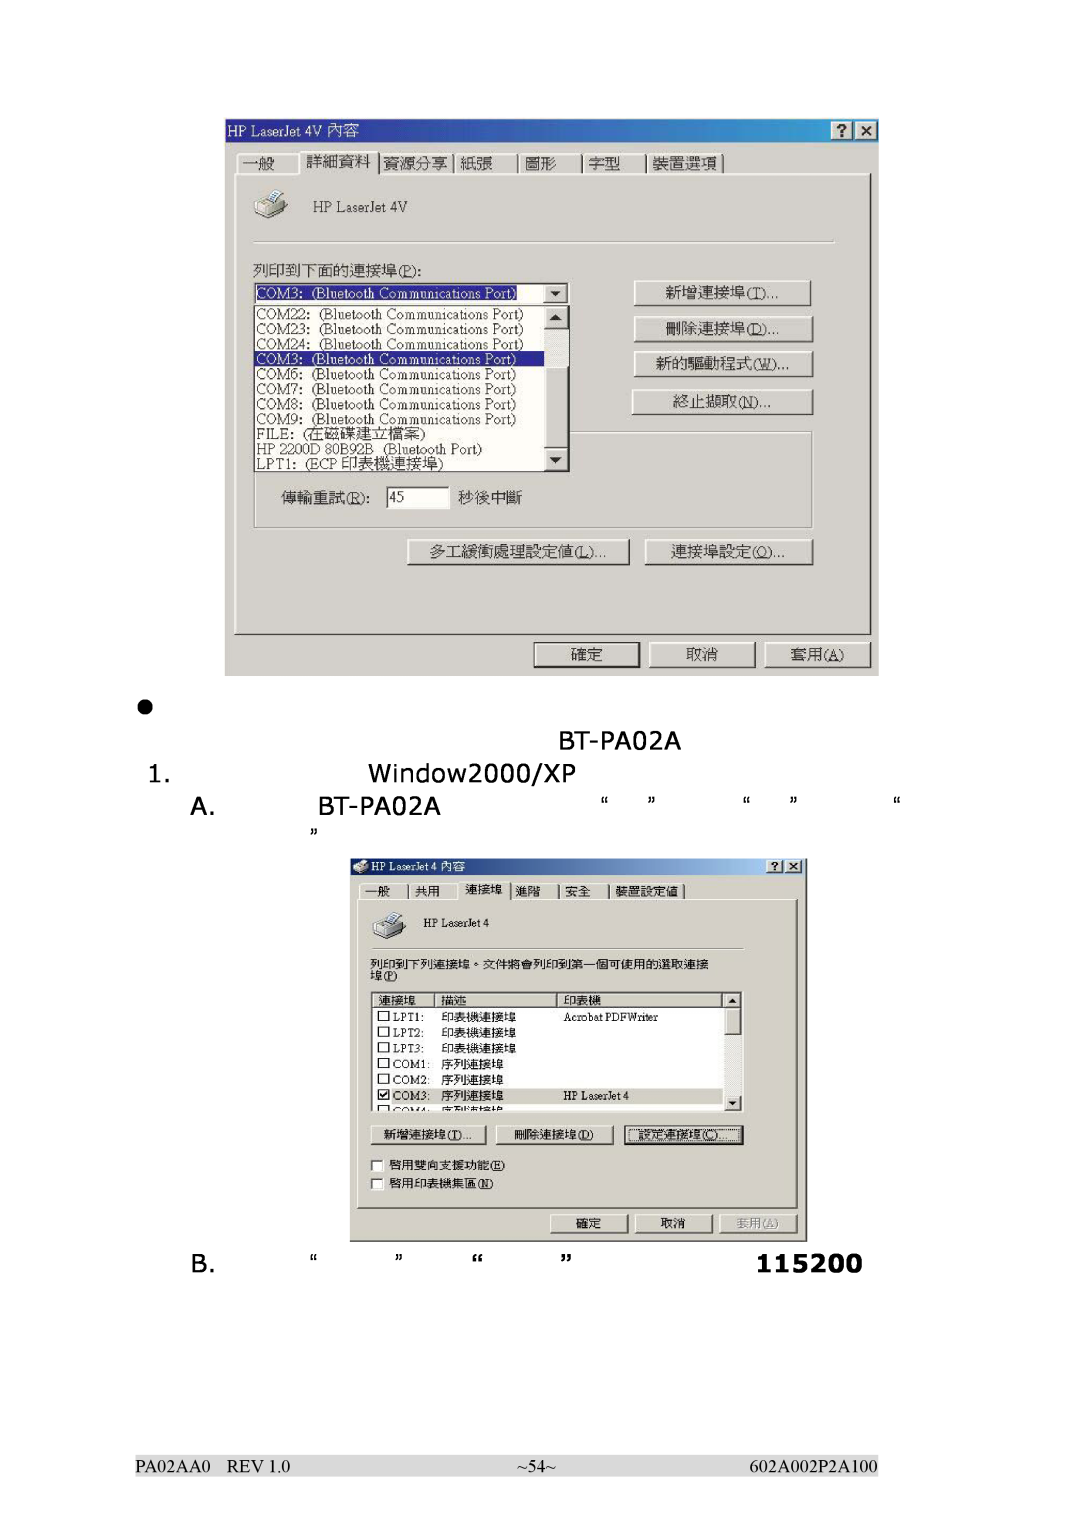 EPoX Computer manual A. BT-PA02A “”“”“ ” B. “”“”, Window2000/XP, PA02AA0 REV, ~54~, 602A002P2A100 